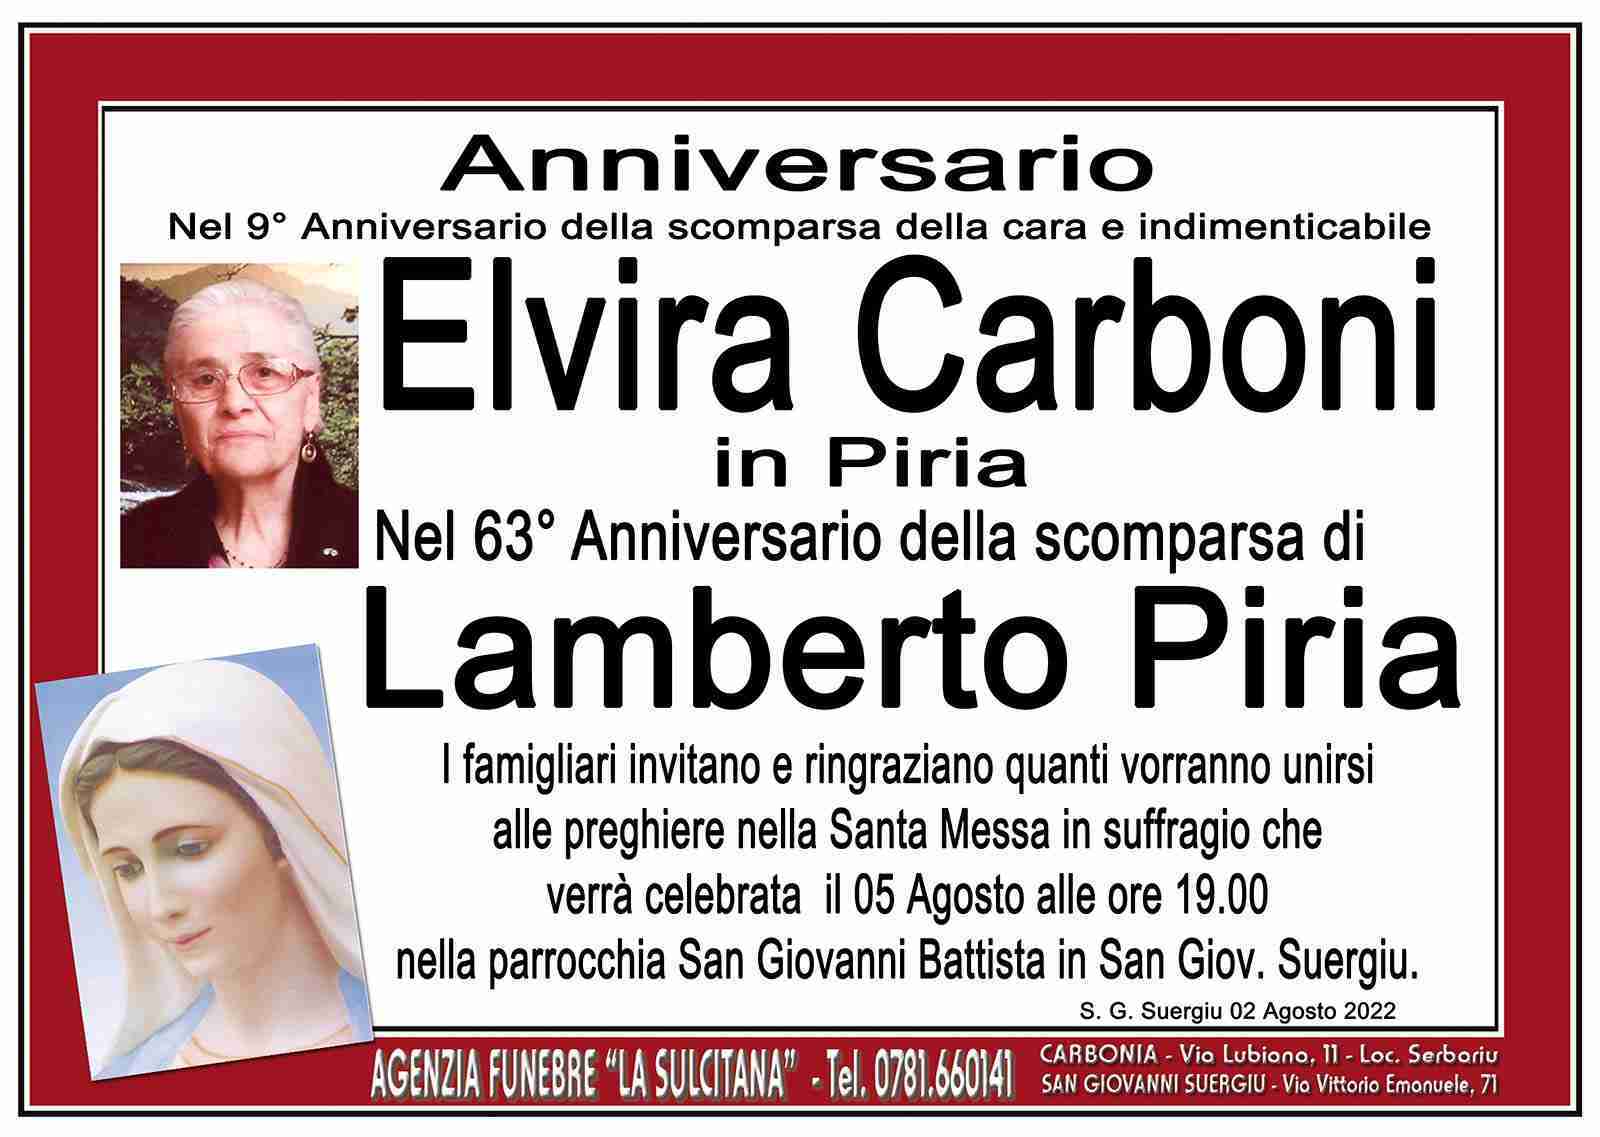 Elvira Carboni e Lamberto Piria